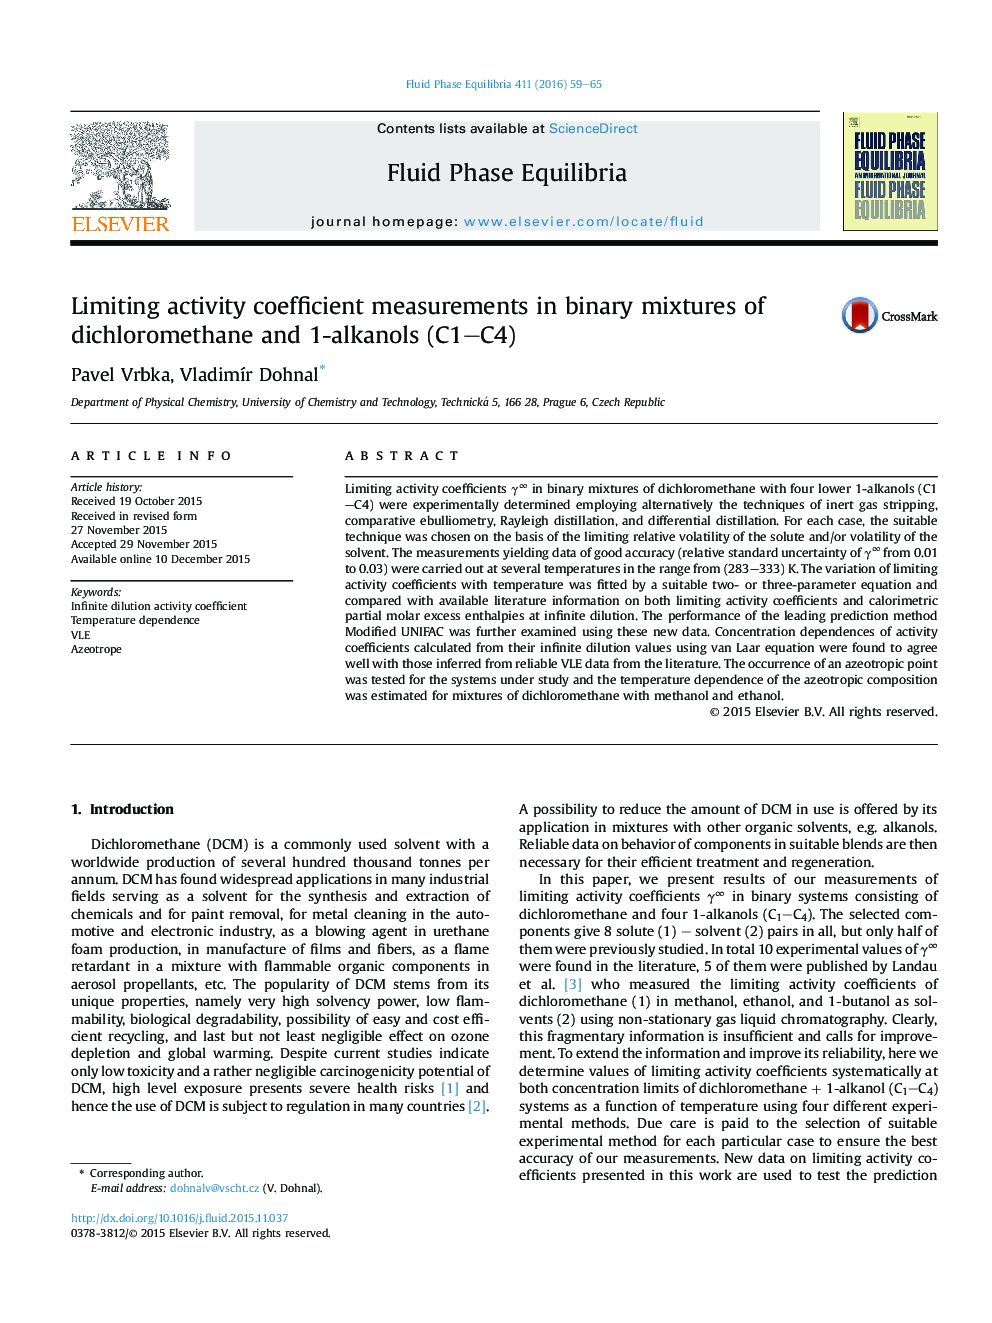 Limiting activity coefficient measurements in binary mixtures of dichloromethane and 1-alkanols (C1–C4)